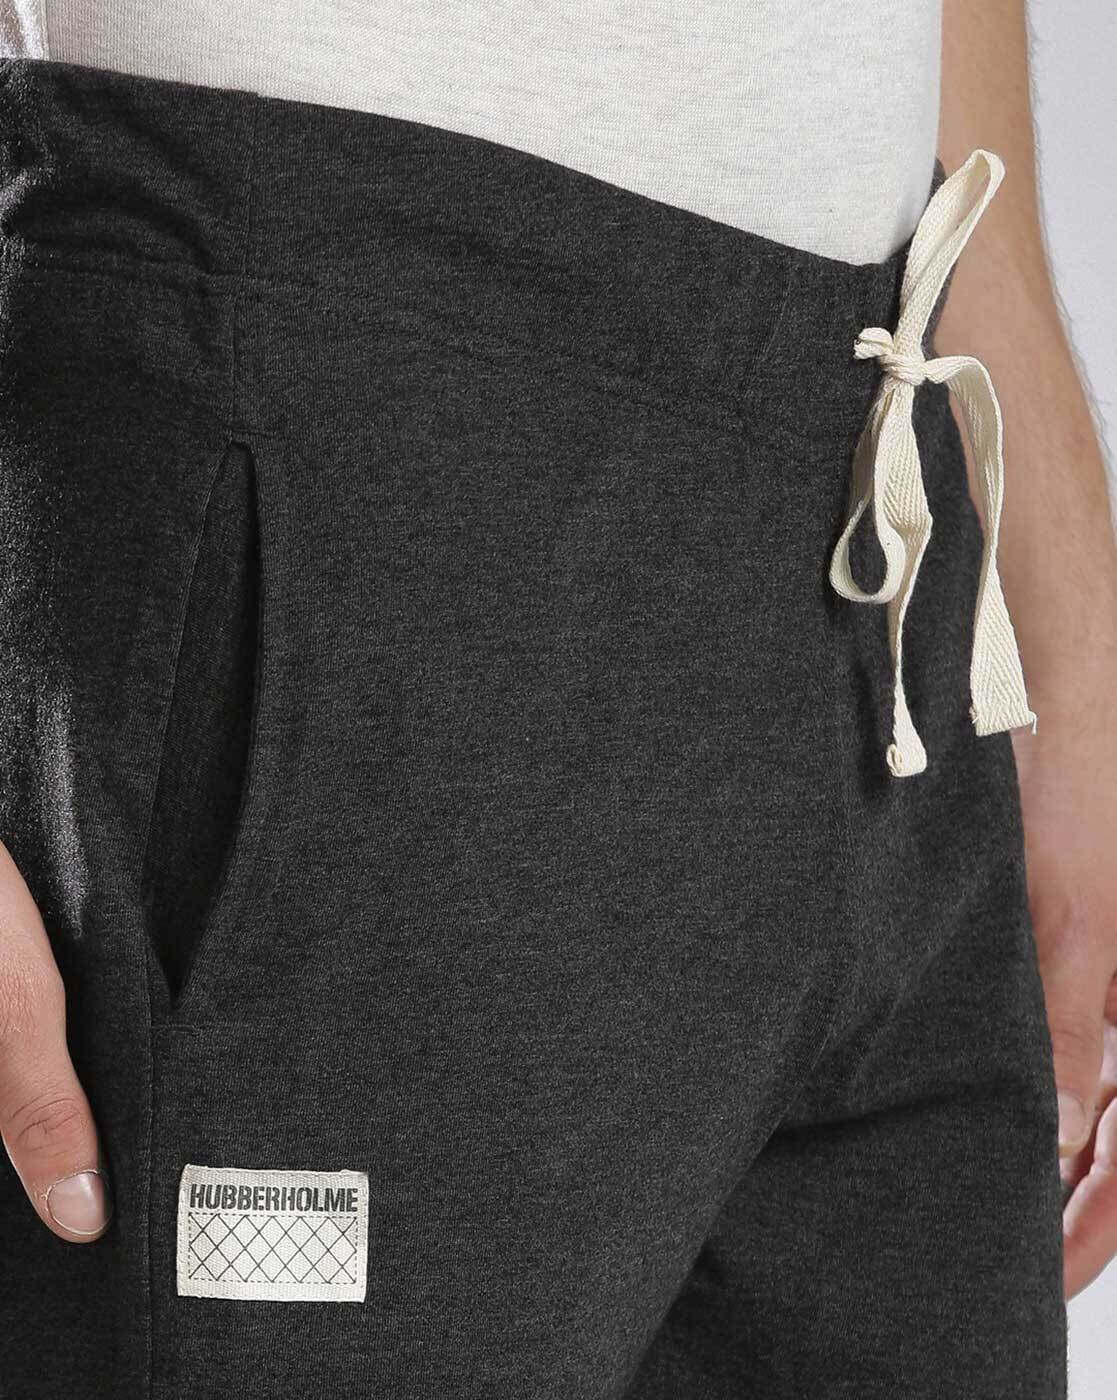 Hubberholme Men's Cotton Blend Slim Fit All Season Wear Track Pants (Solid,  Dark Blue, 38) : Amazon.in: Clothing & Accessories